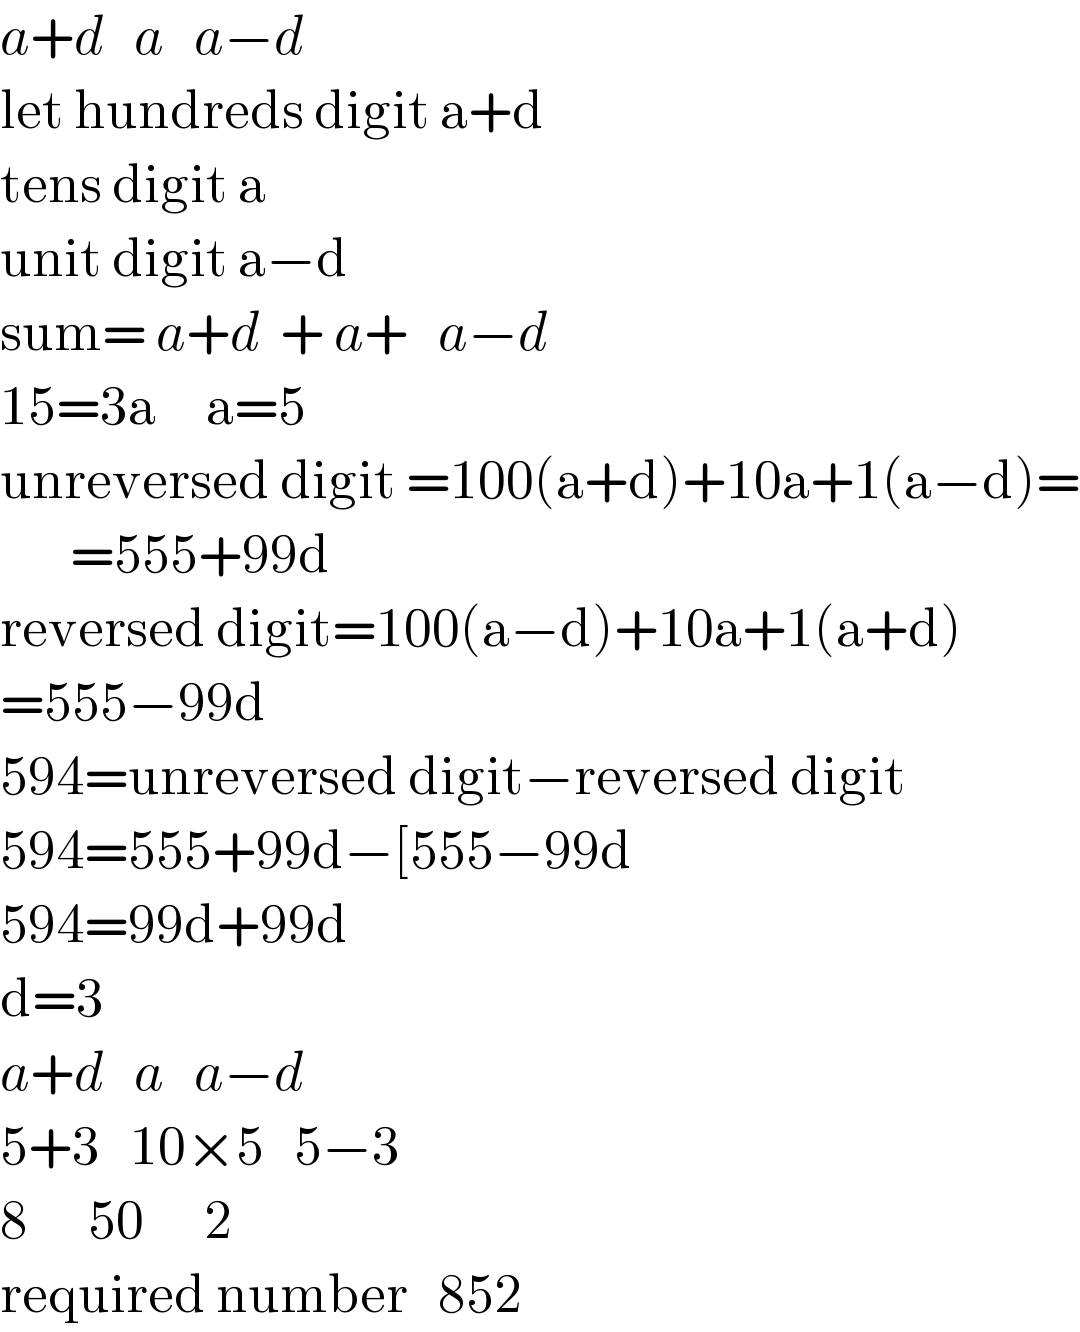 a+d   a   a−d  let hundreds digit a+d  tens digit a  unit digit a−d  sum= a+d  + a+   a−d  15=3a     a=5  unreversed digit =100(a+d)+10a+1(a−d)=         =555+99d  reversed digit=100(a−d)+10a+1(a+d)  =555−99d  594=unreversed digit−reversed digit  594=555+99d−[555−99d  594=99d+99d  d=3  a+d   a   a−d  5+3   10×5   5−3  8      50      2  required number   852  